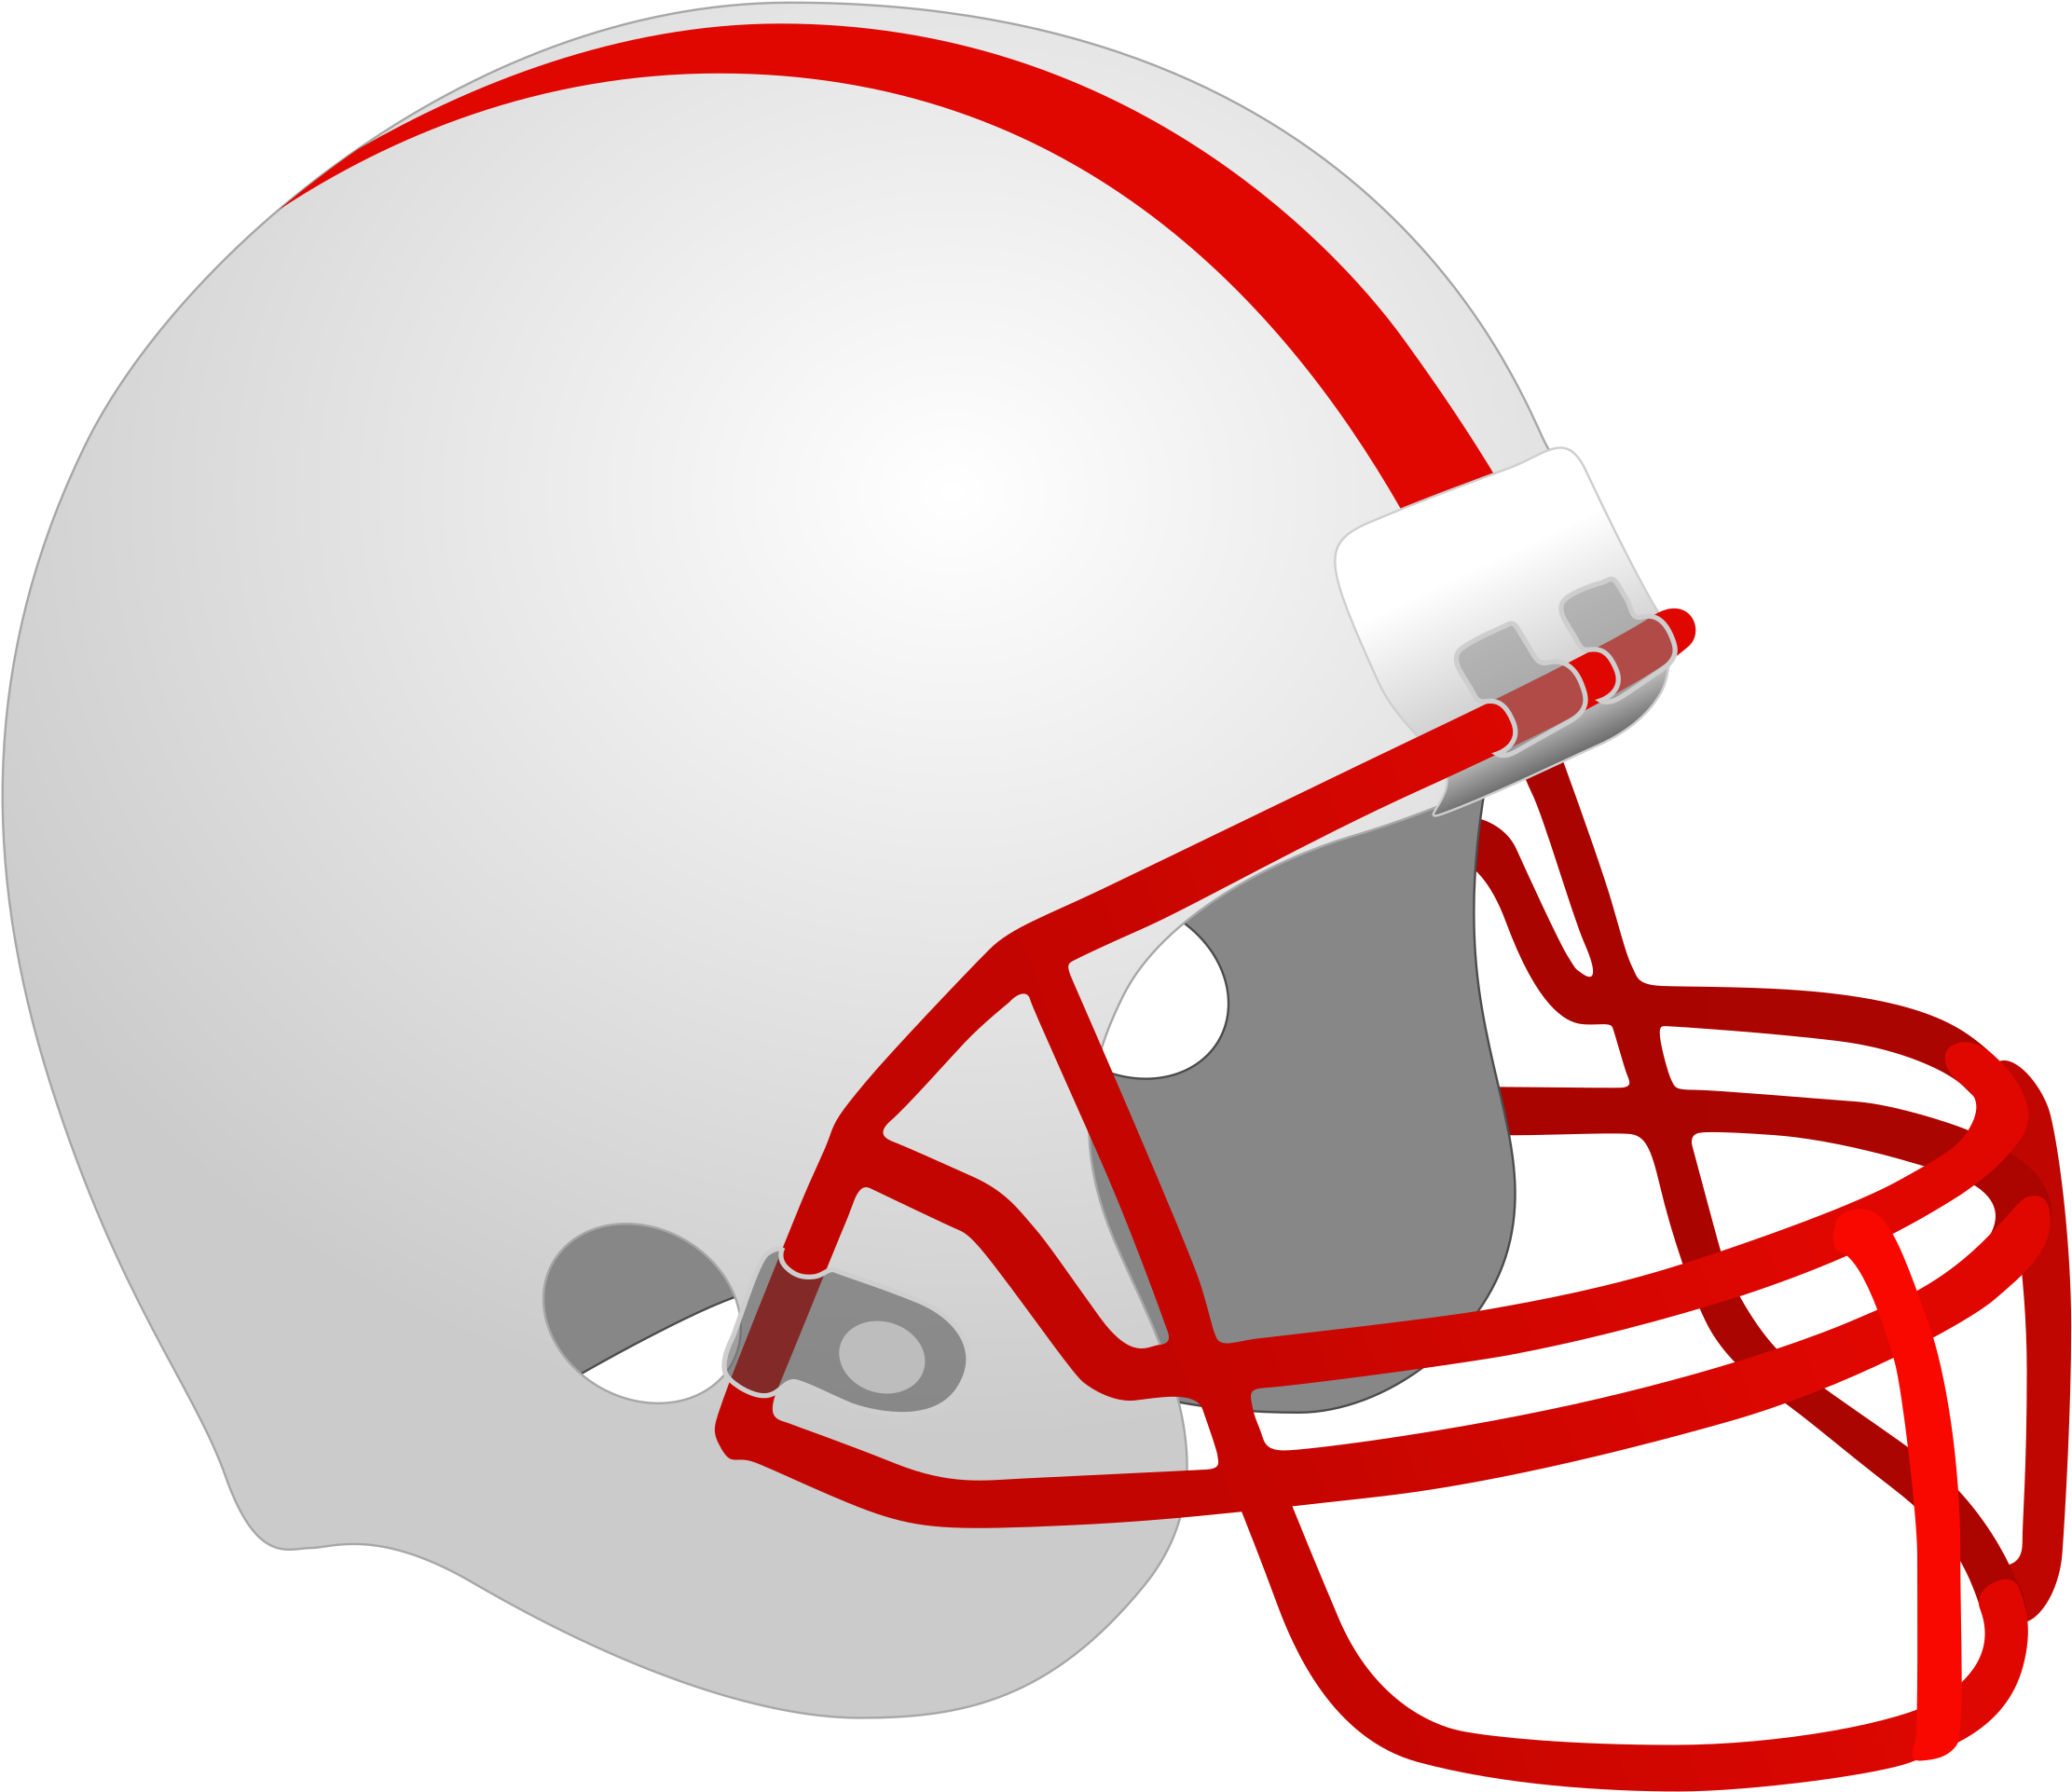 Football Helmet Png Image - Red Football Helmet Clipart (2400x2400)